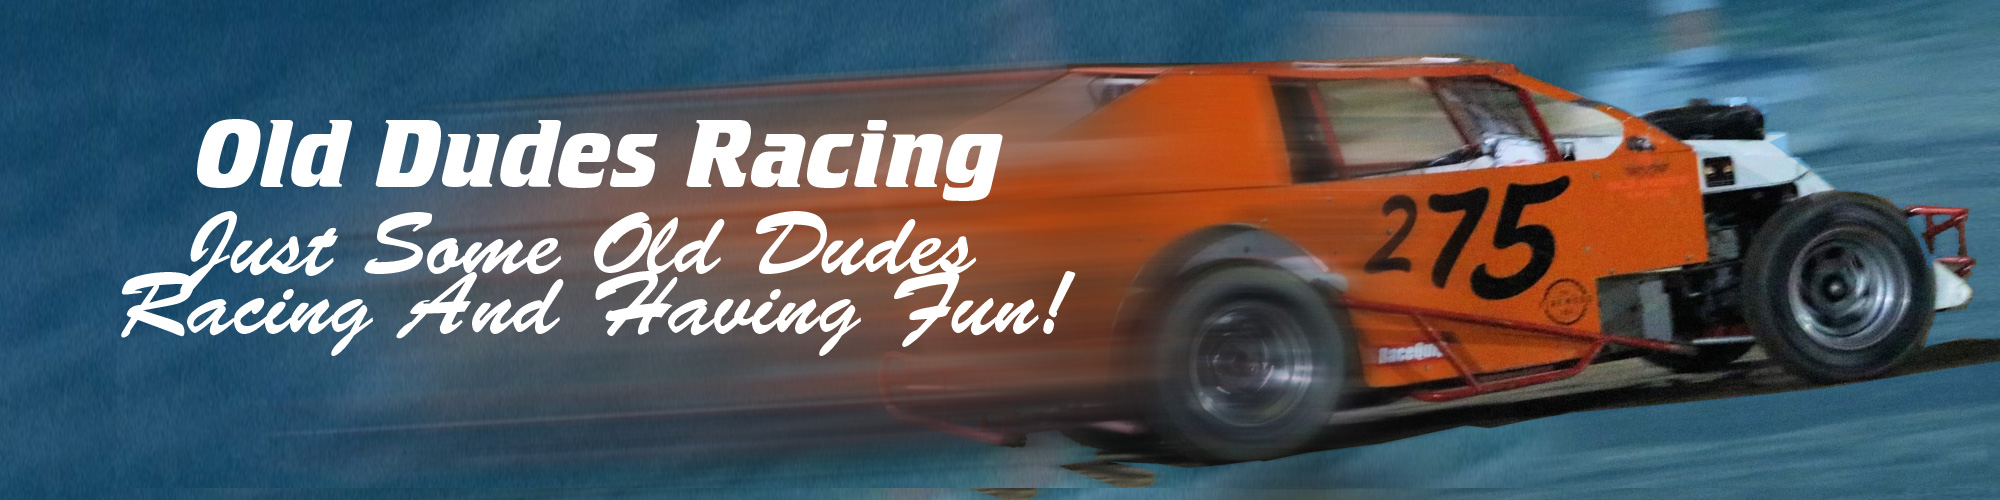 old dudes racing